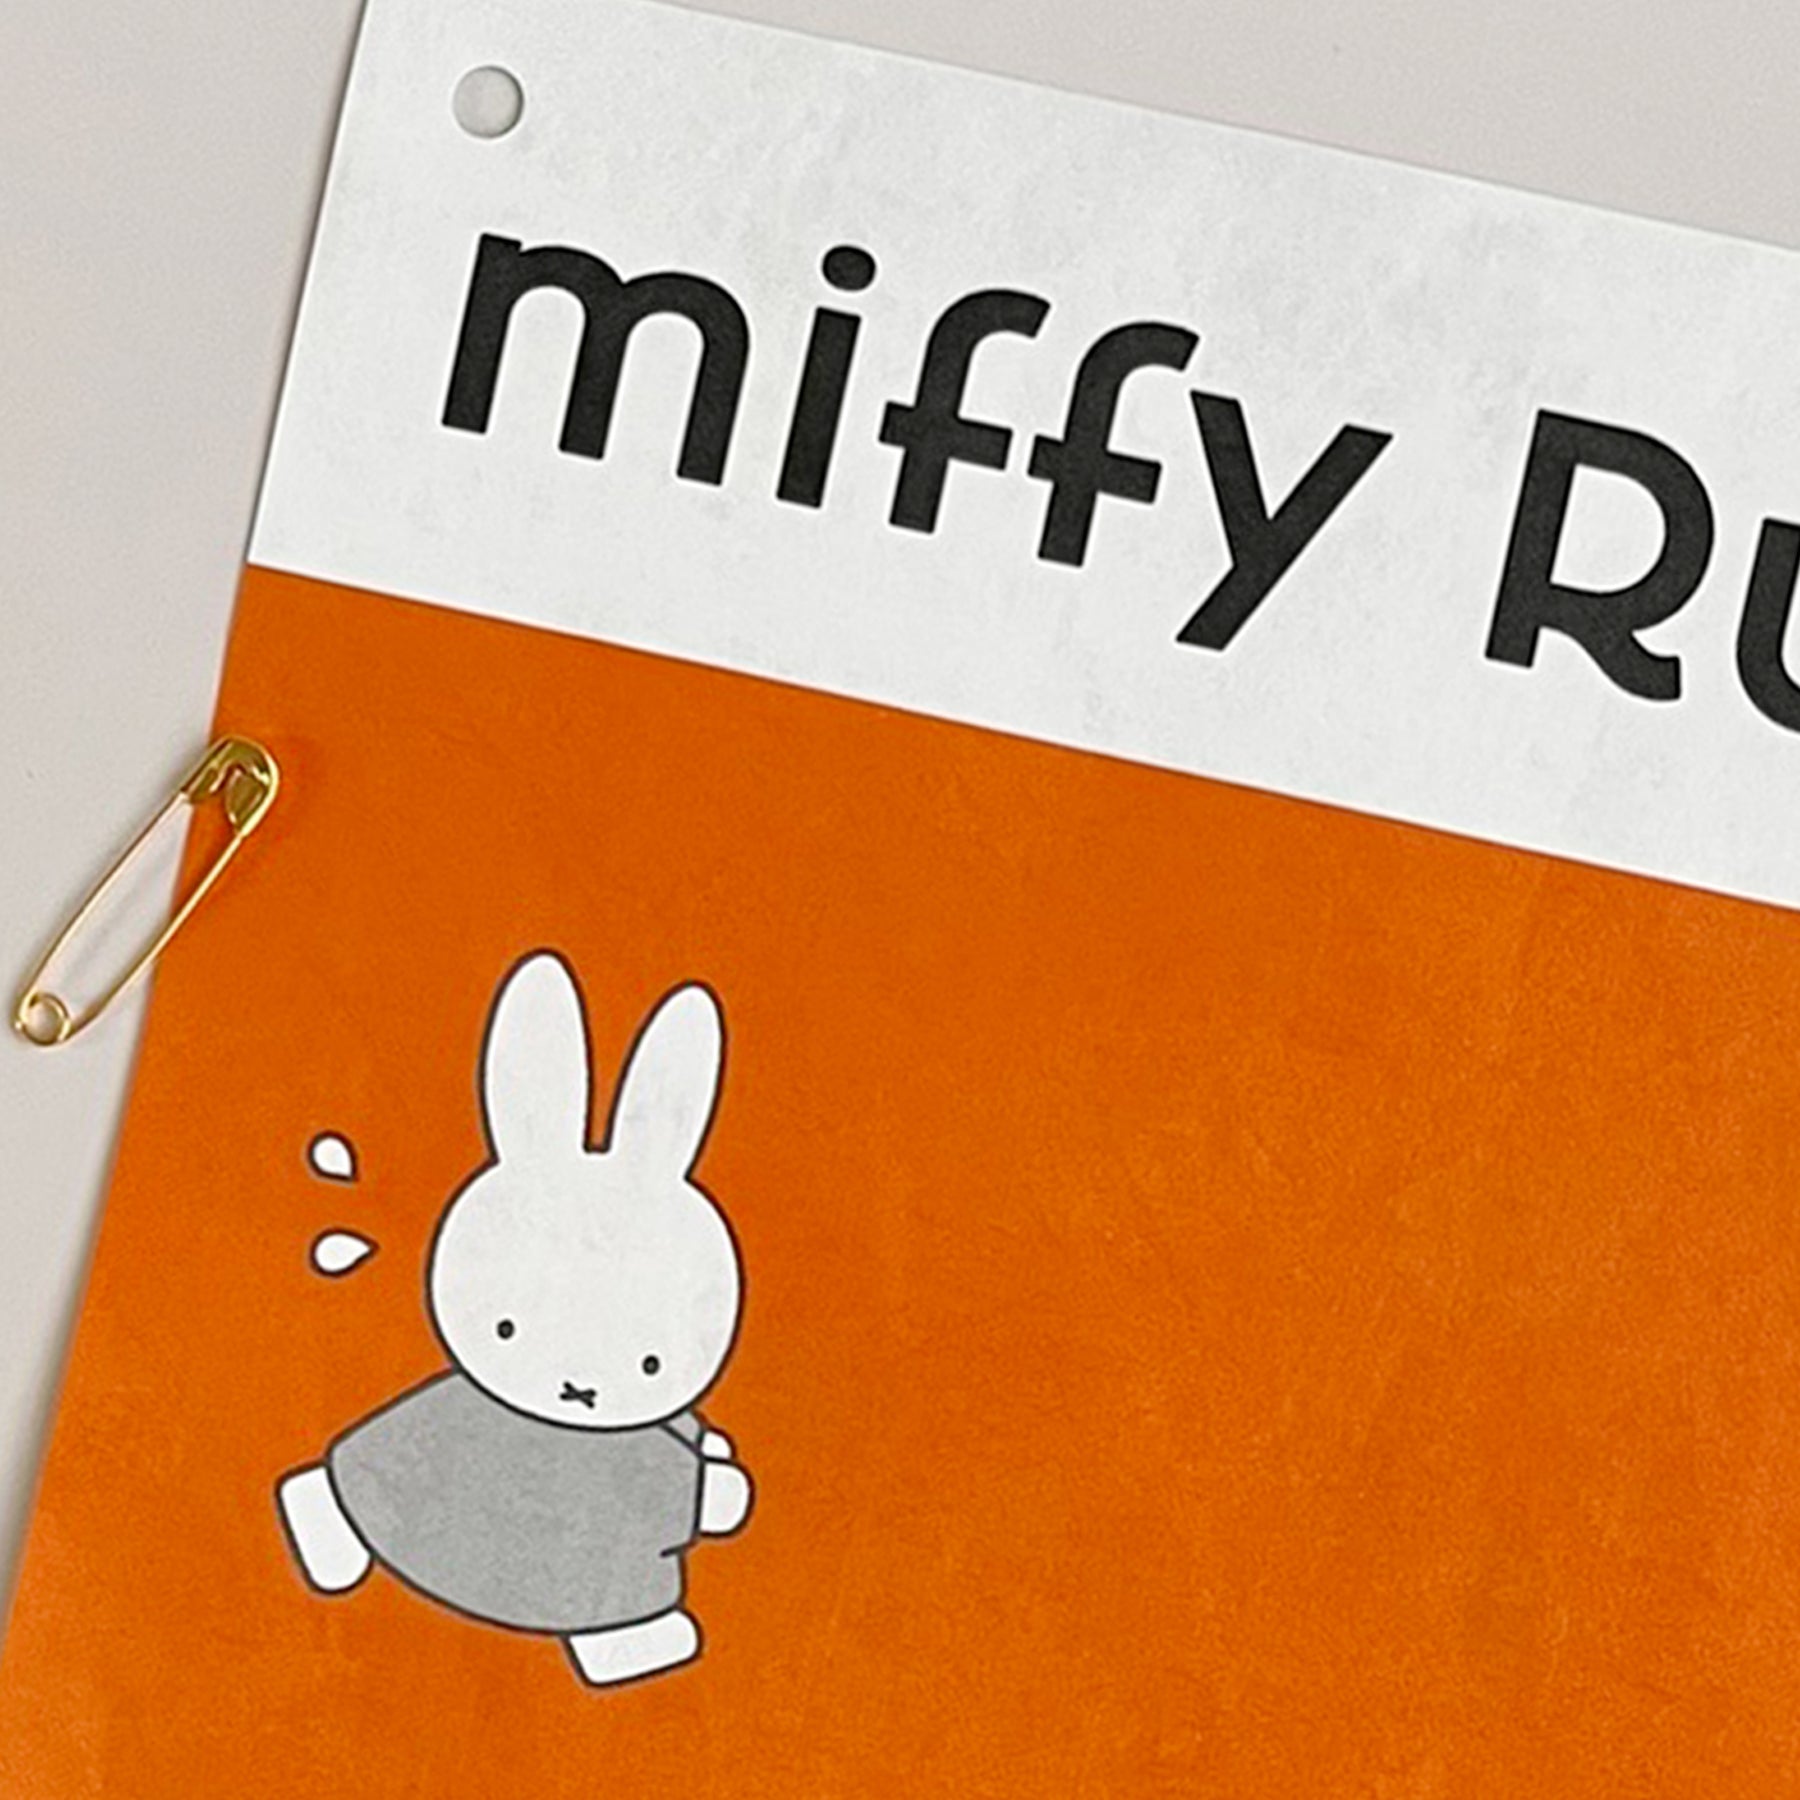 miffy | miffy Run Number Cloth 運動選手號碼布